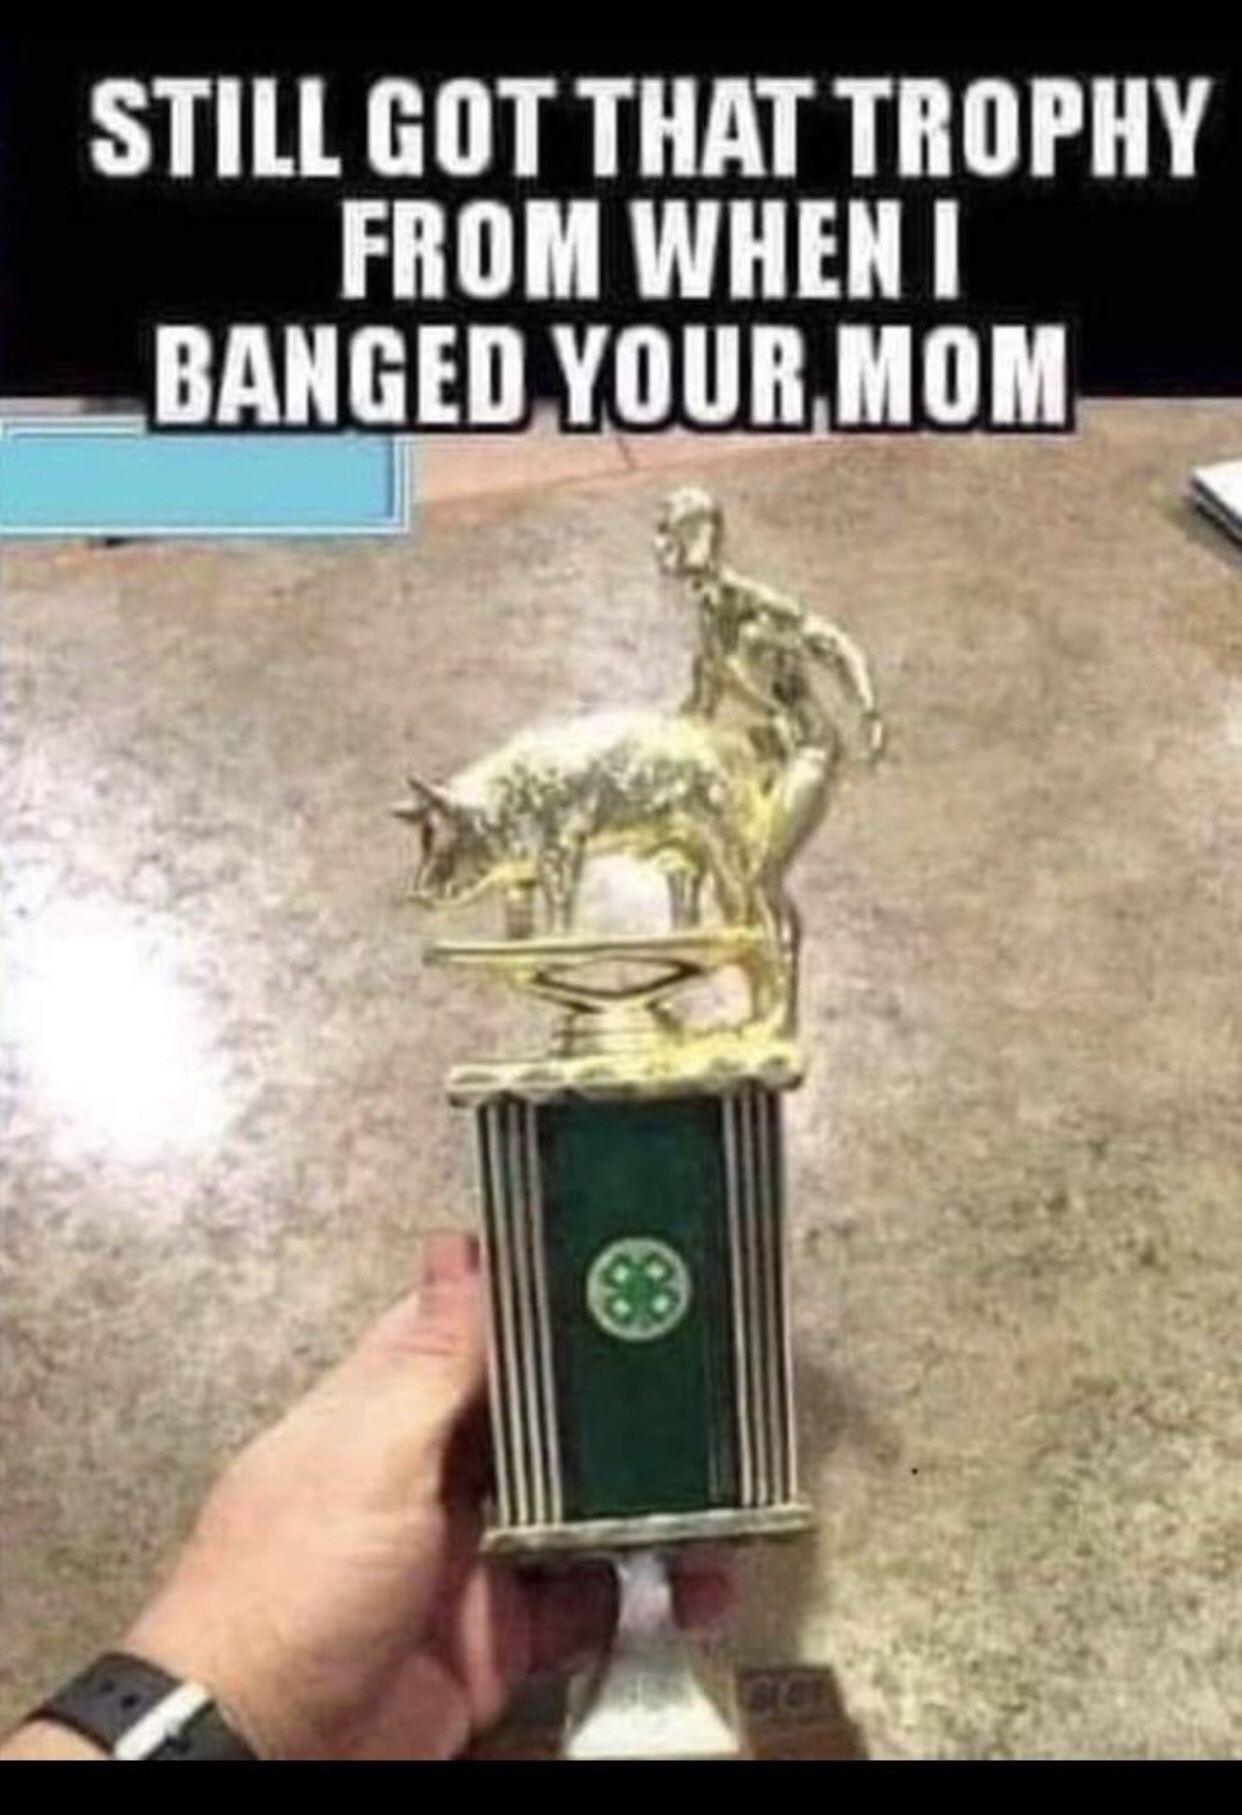 random pics - banged your mom trophy - Still Got That Trophy From Wheni Banged Your Mom